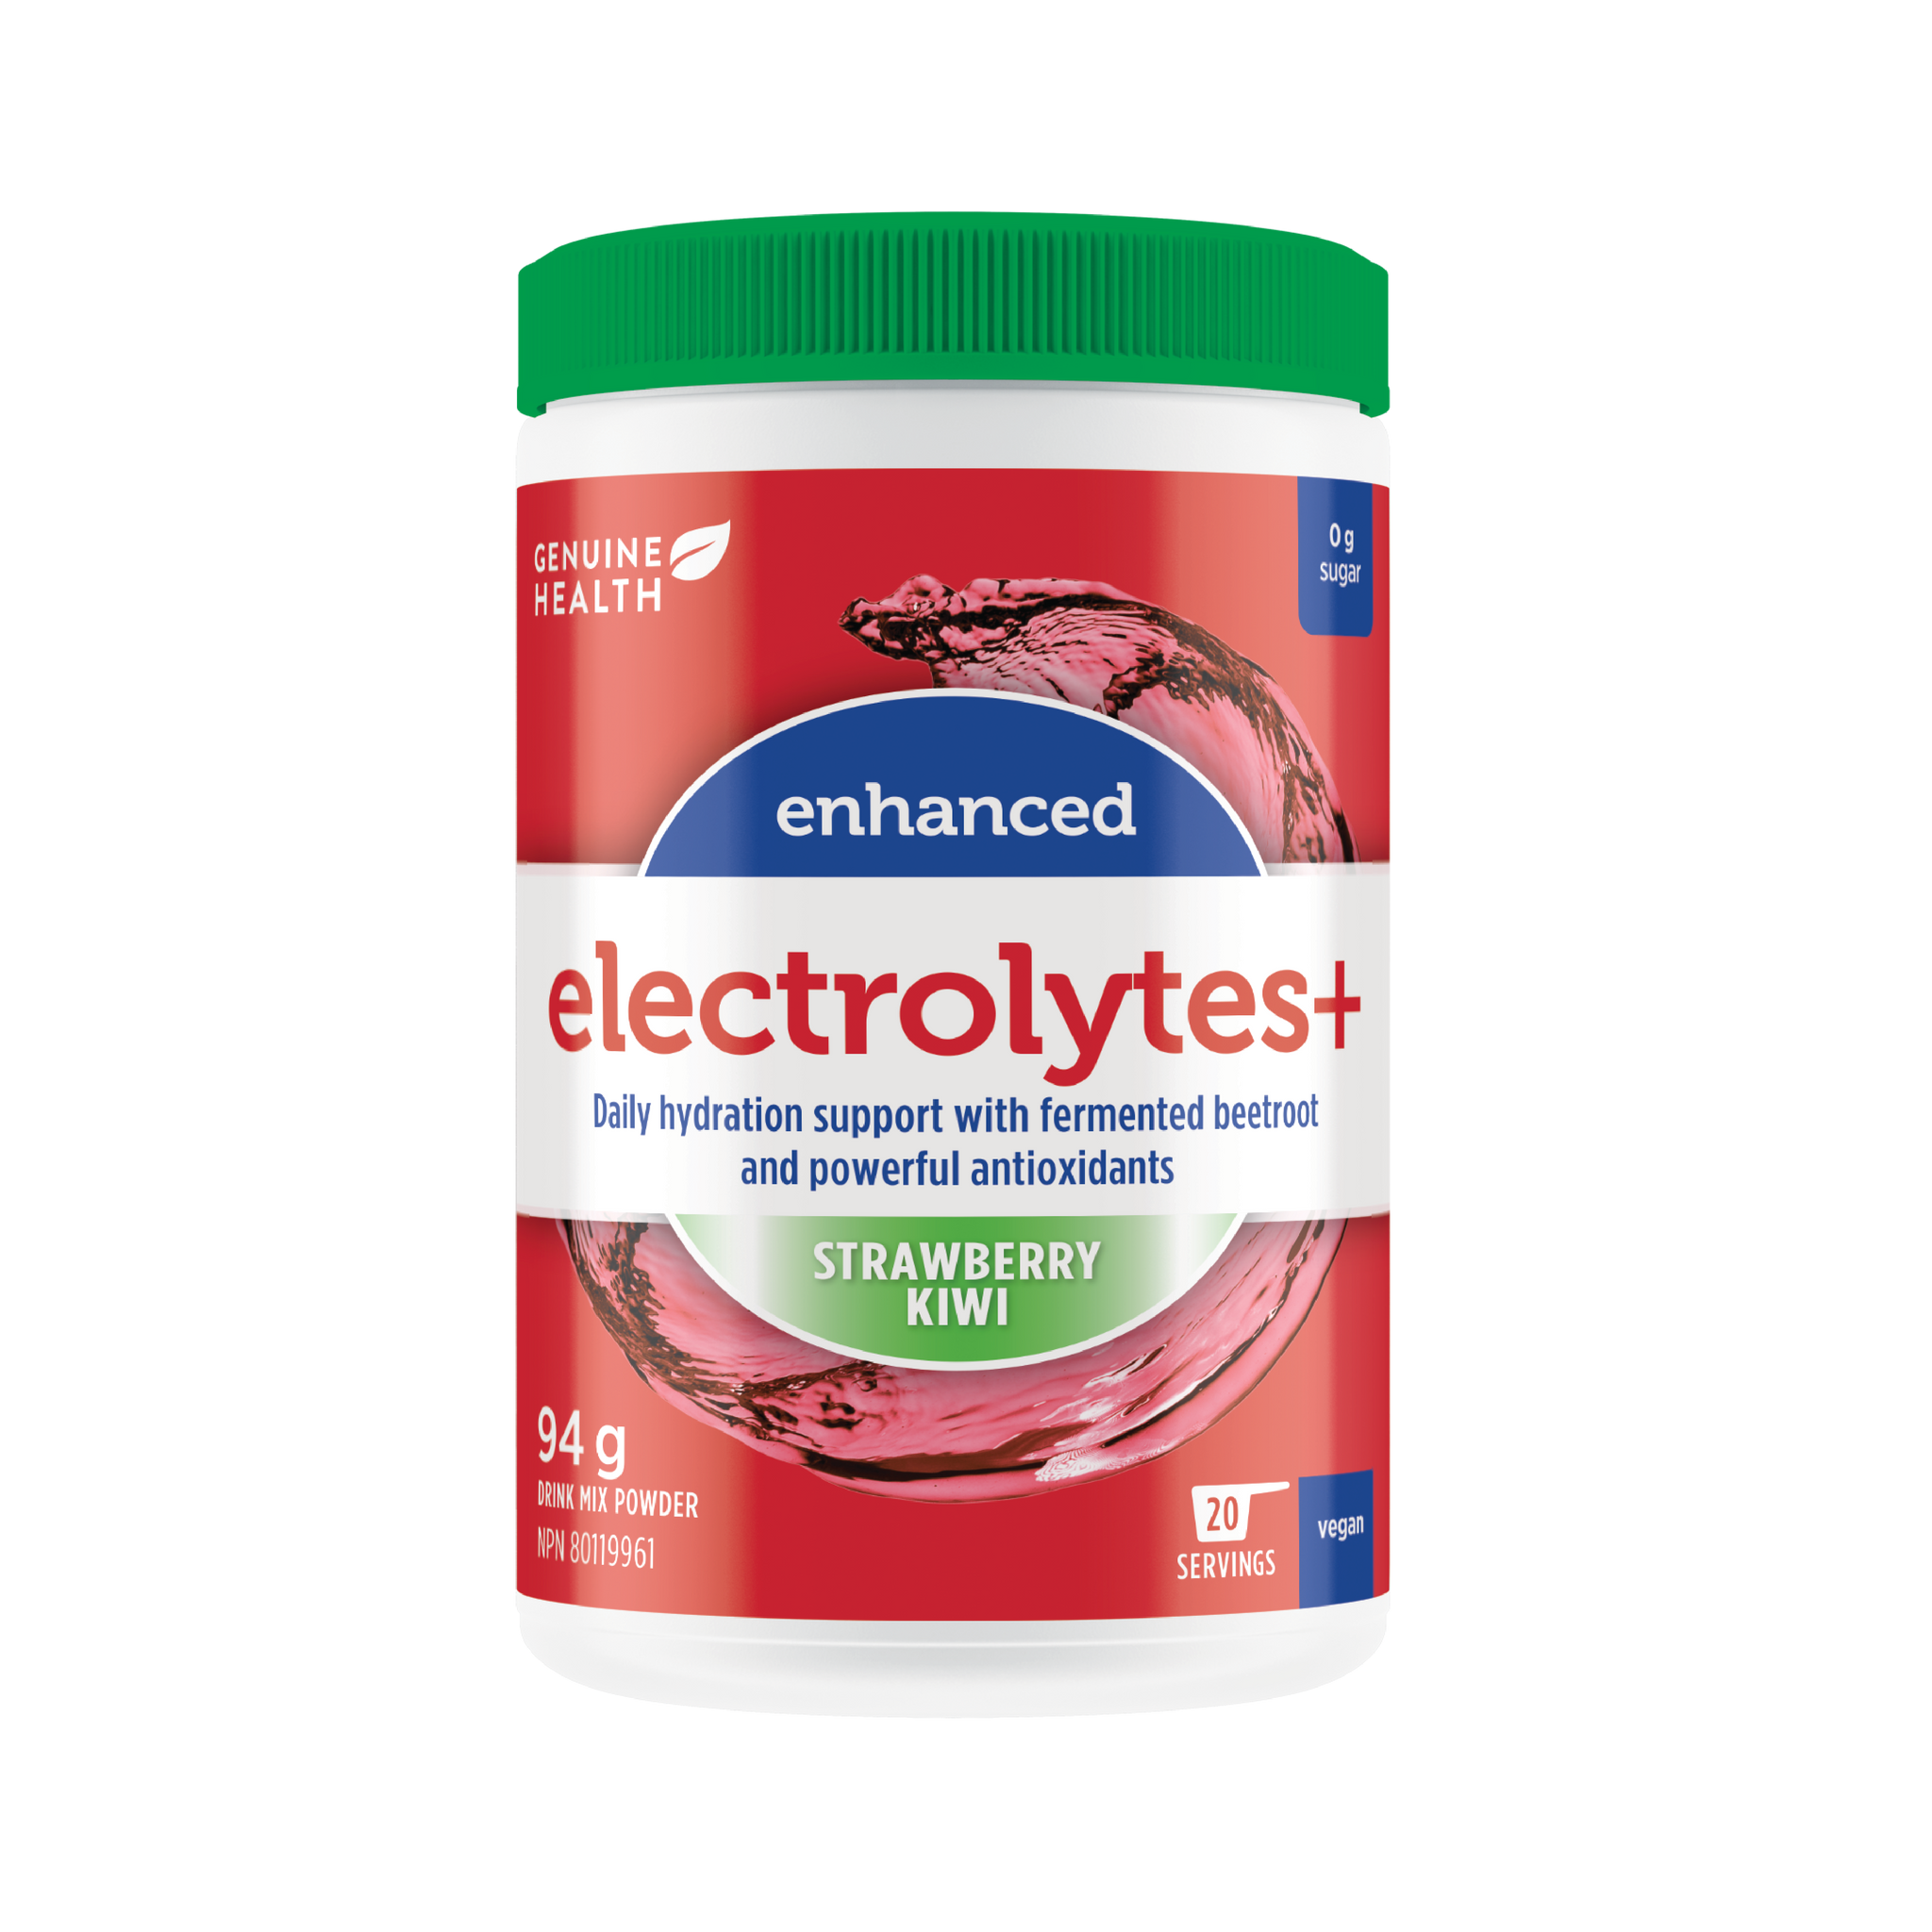 Genuine Health Enhanced Electrolytes+ Strawberry Kiwi 94g